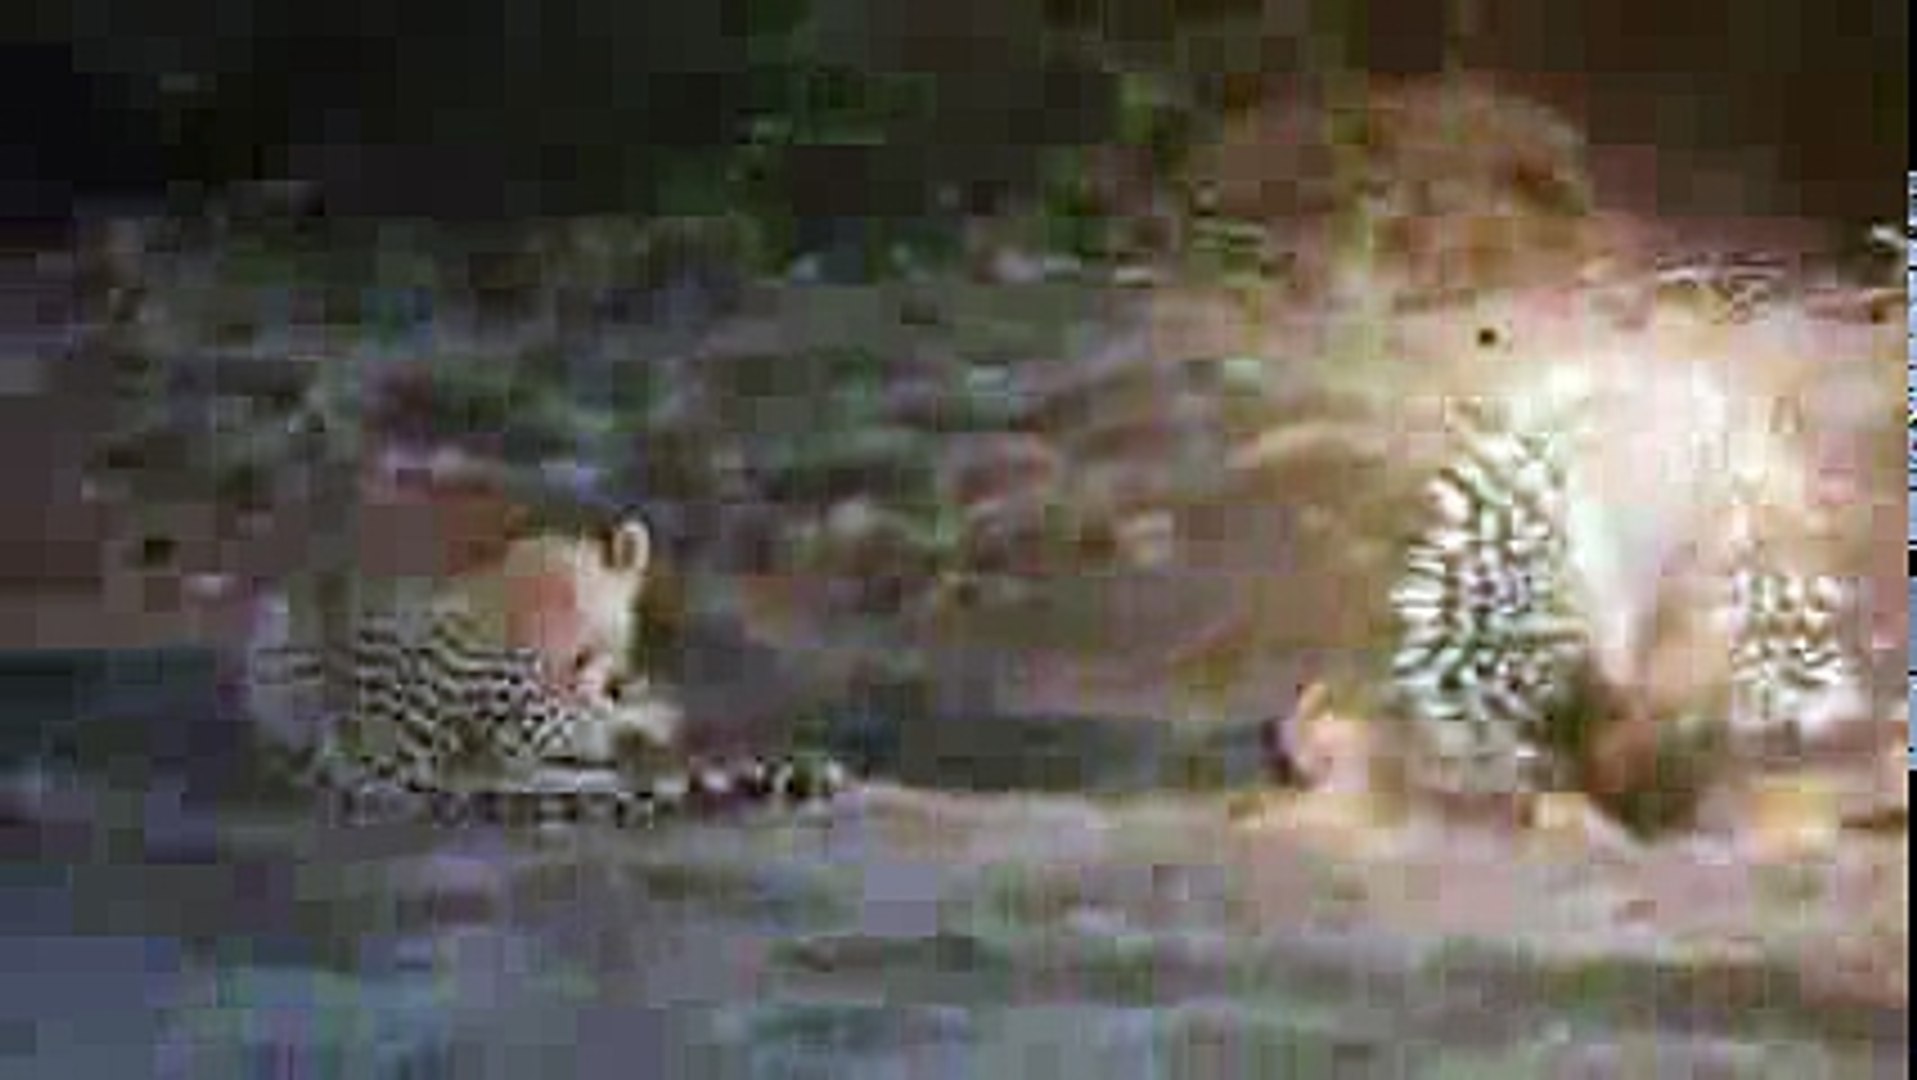 Leopard vs Porcupine - Leopard kill and eat Porcupine - Animals Attack